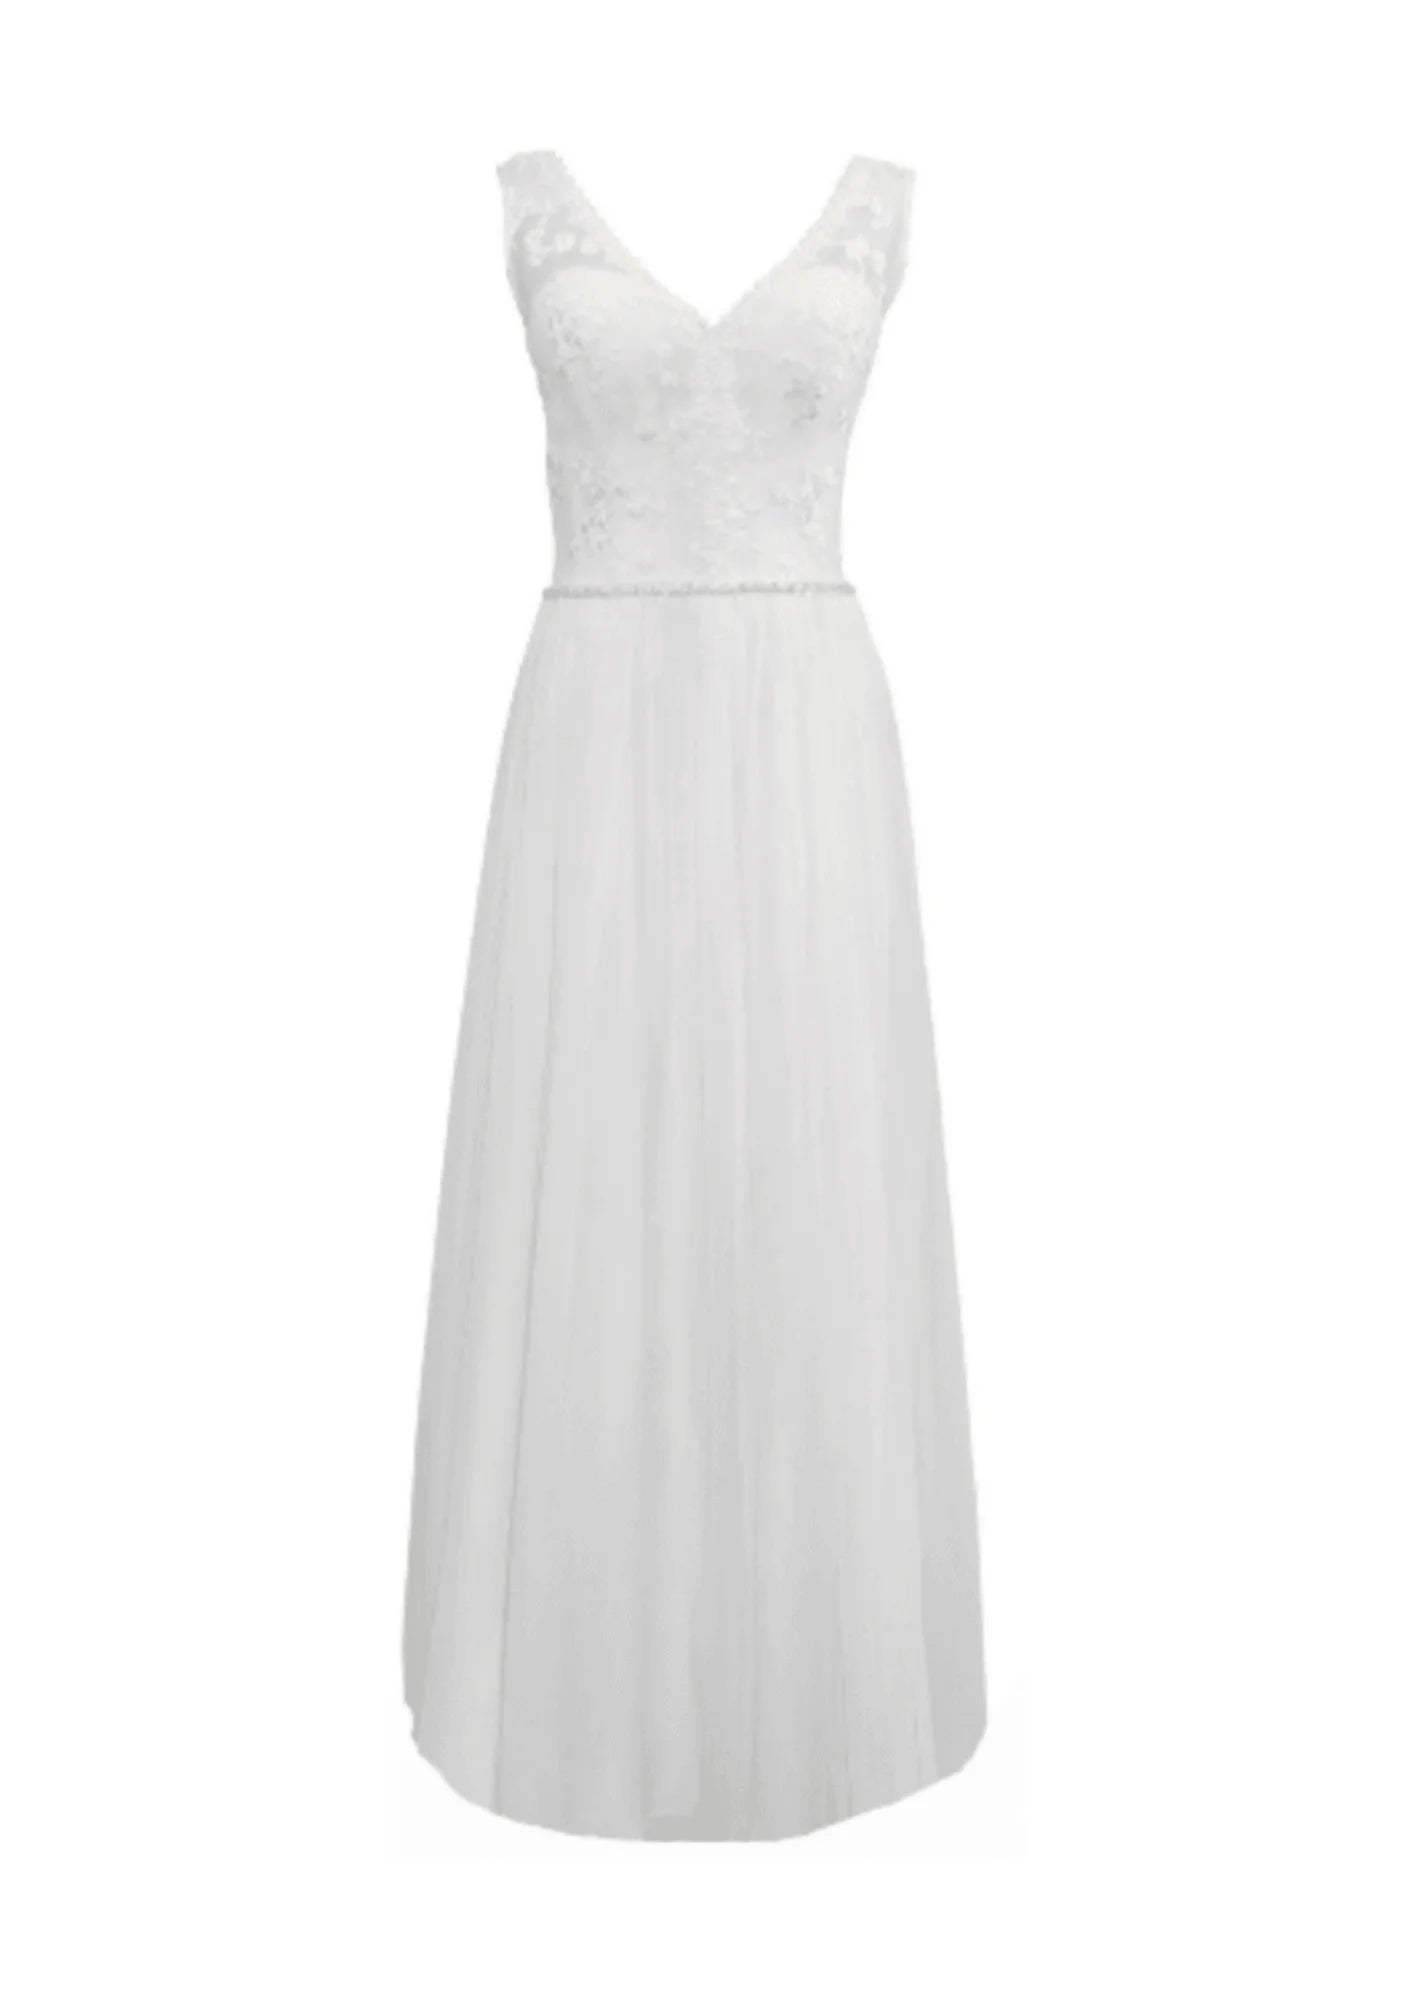 WHITE FLORAL WEDDING DRESS